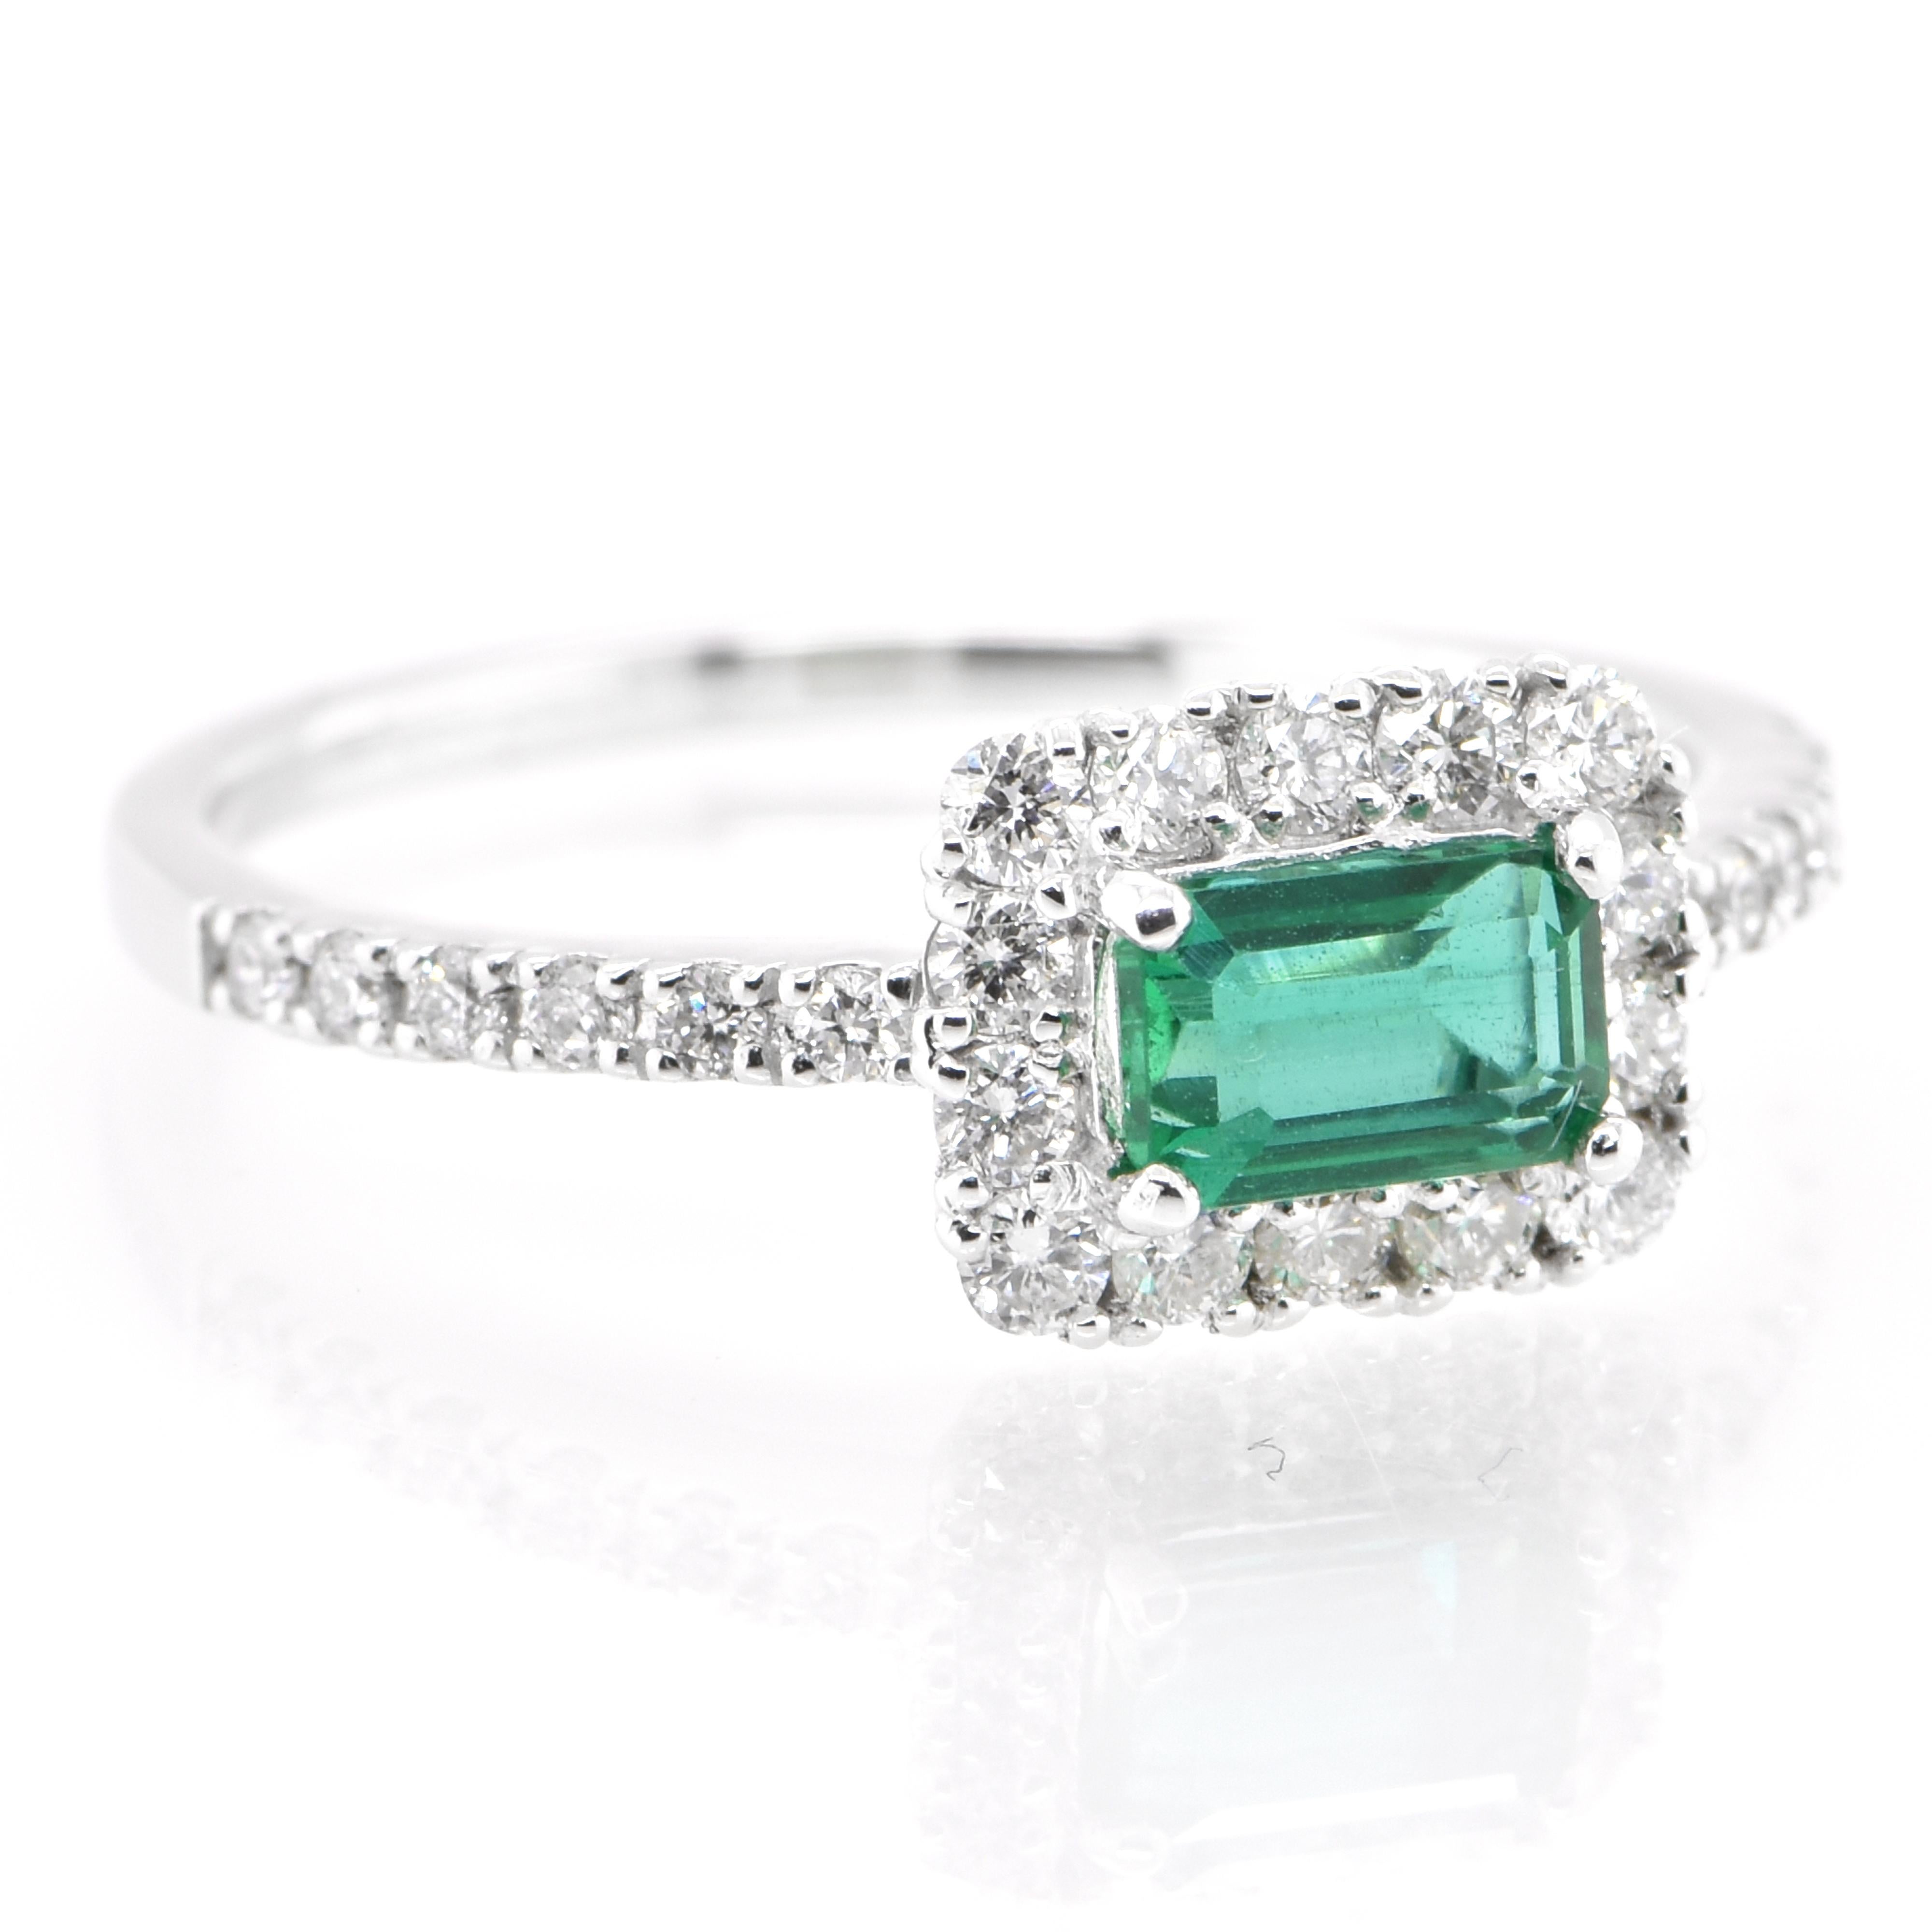 Modern 0.52 Carat Natural Emerald and Diamond Engagement Ring Set in Platinum